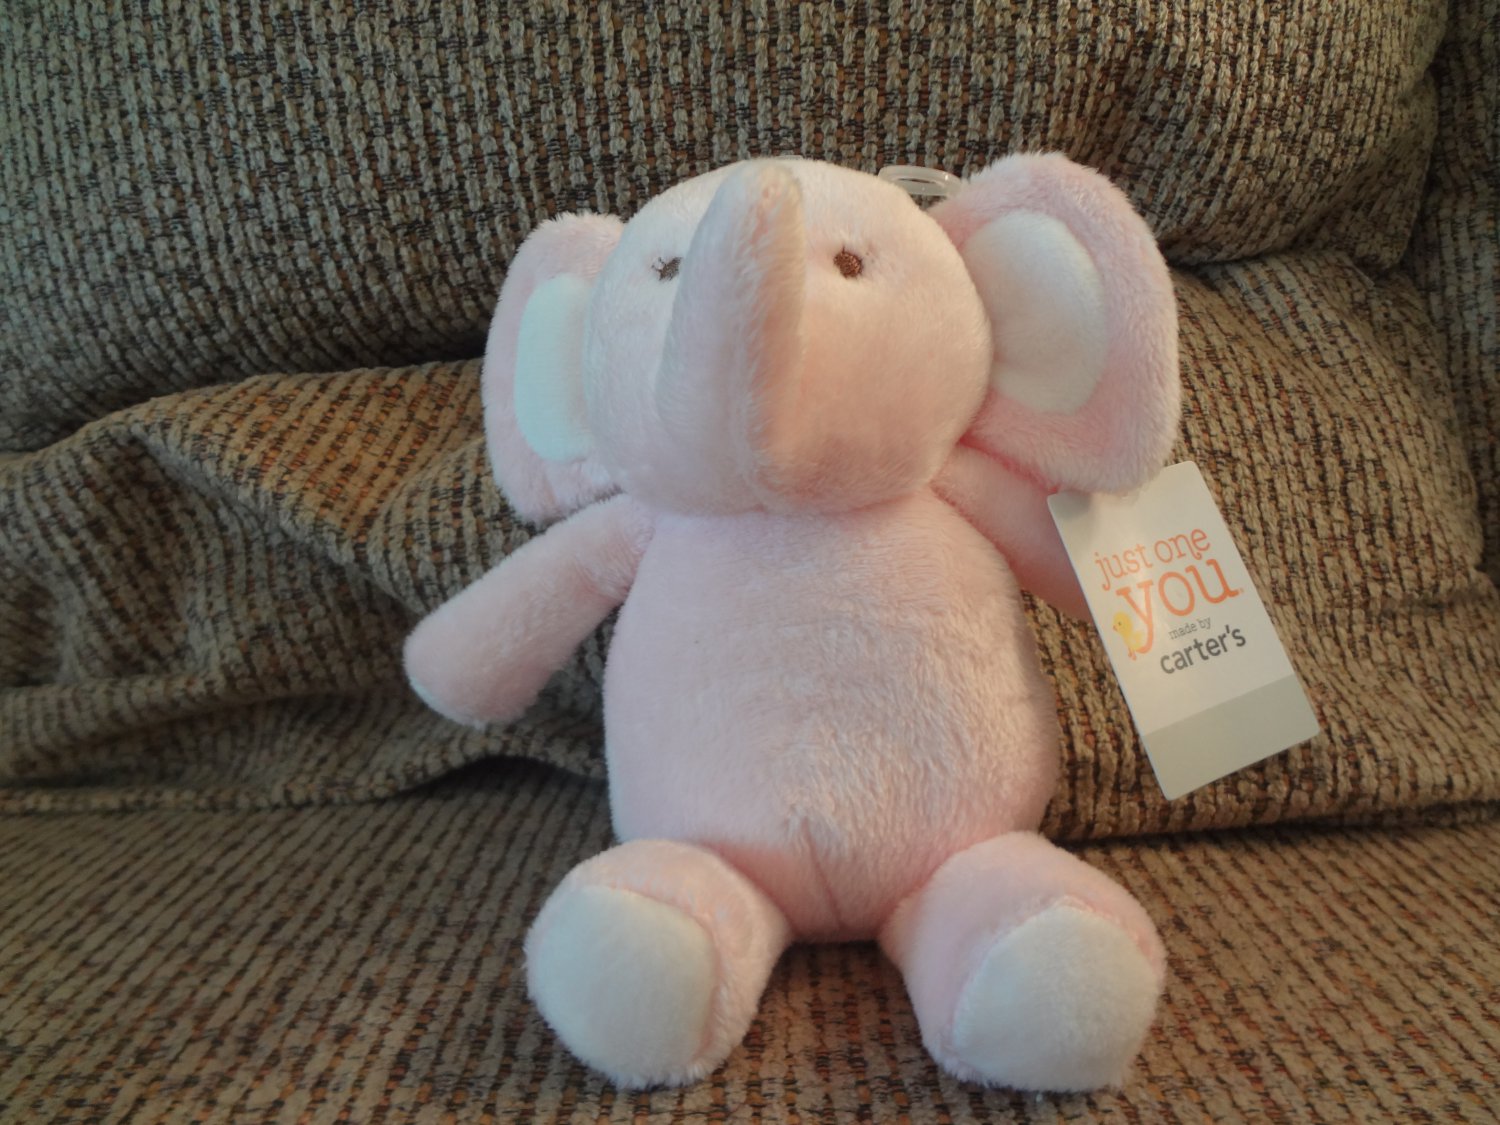 carter's elephant stuffed animal